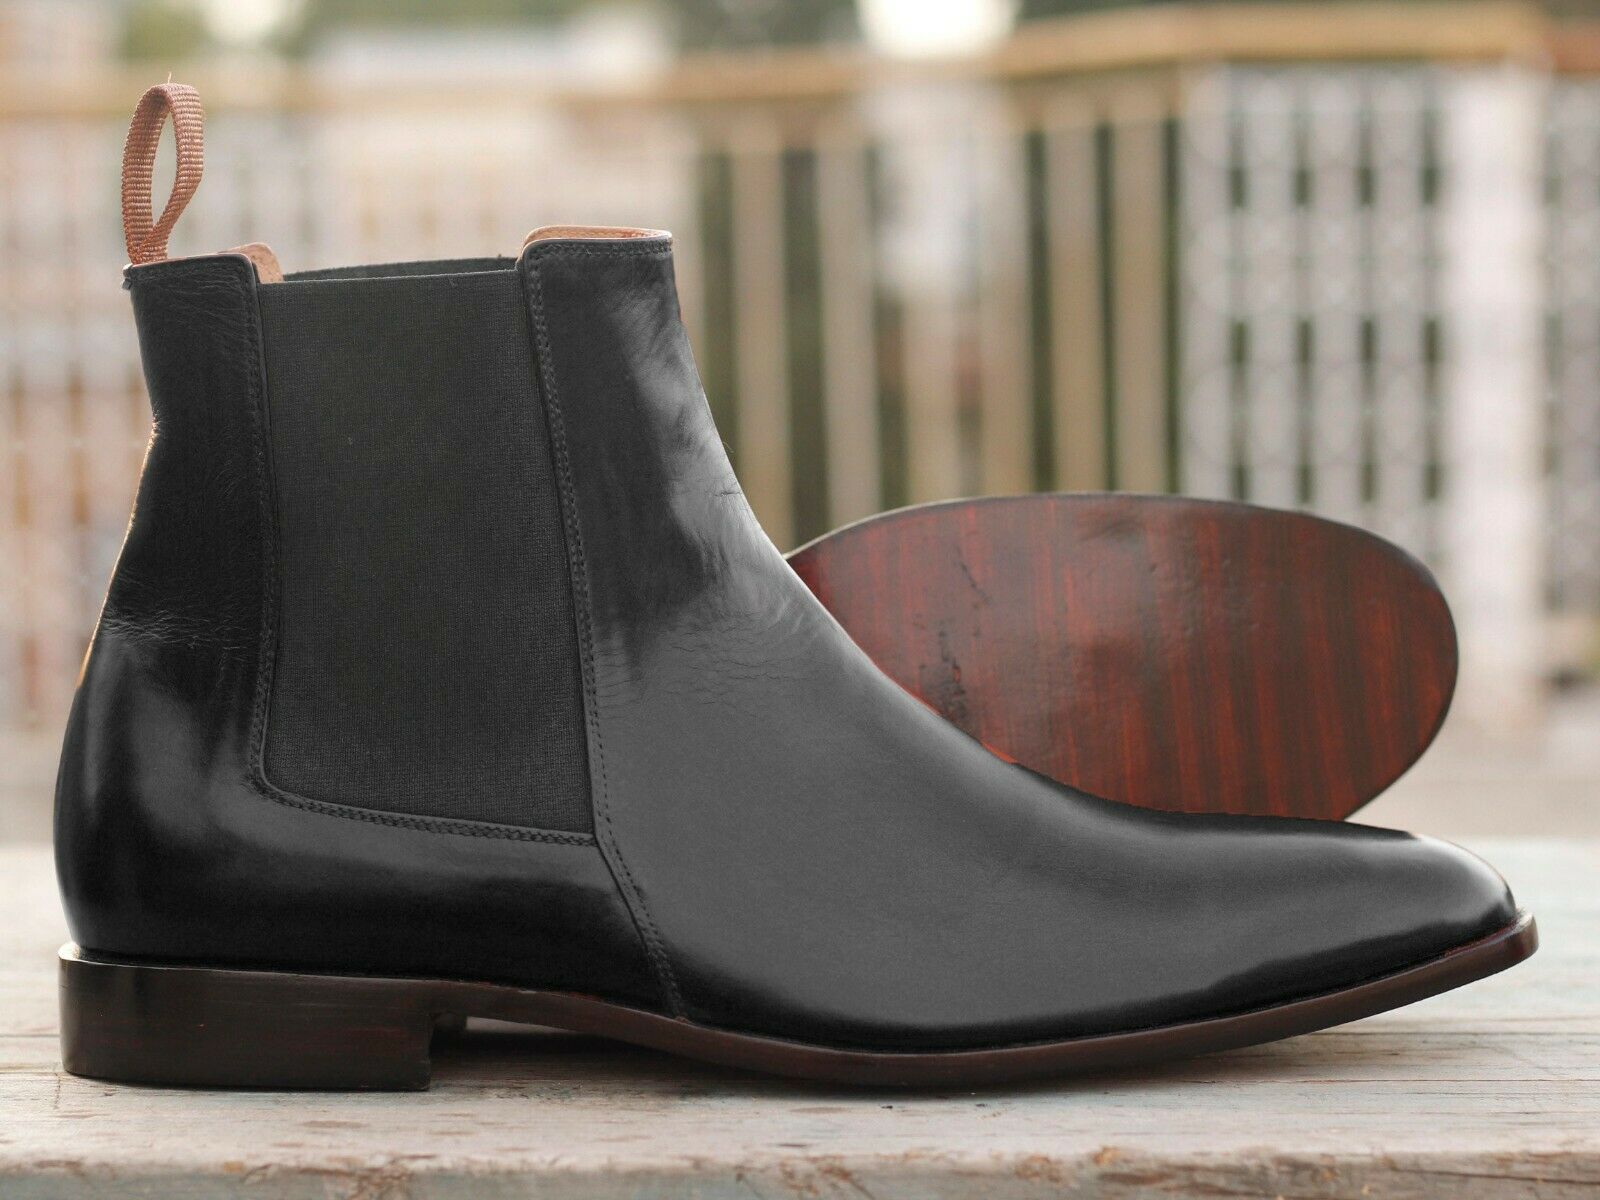 New Handmade Black Leather Chelsea Style Boots Men Dress 